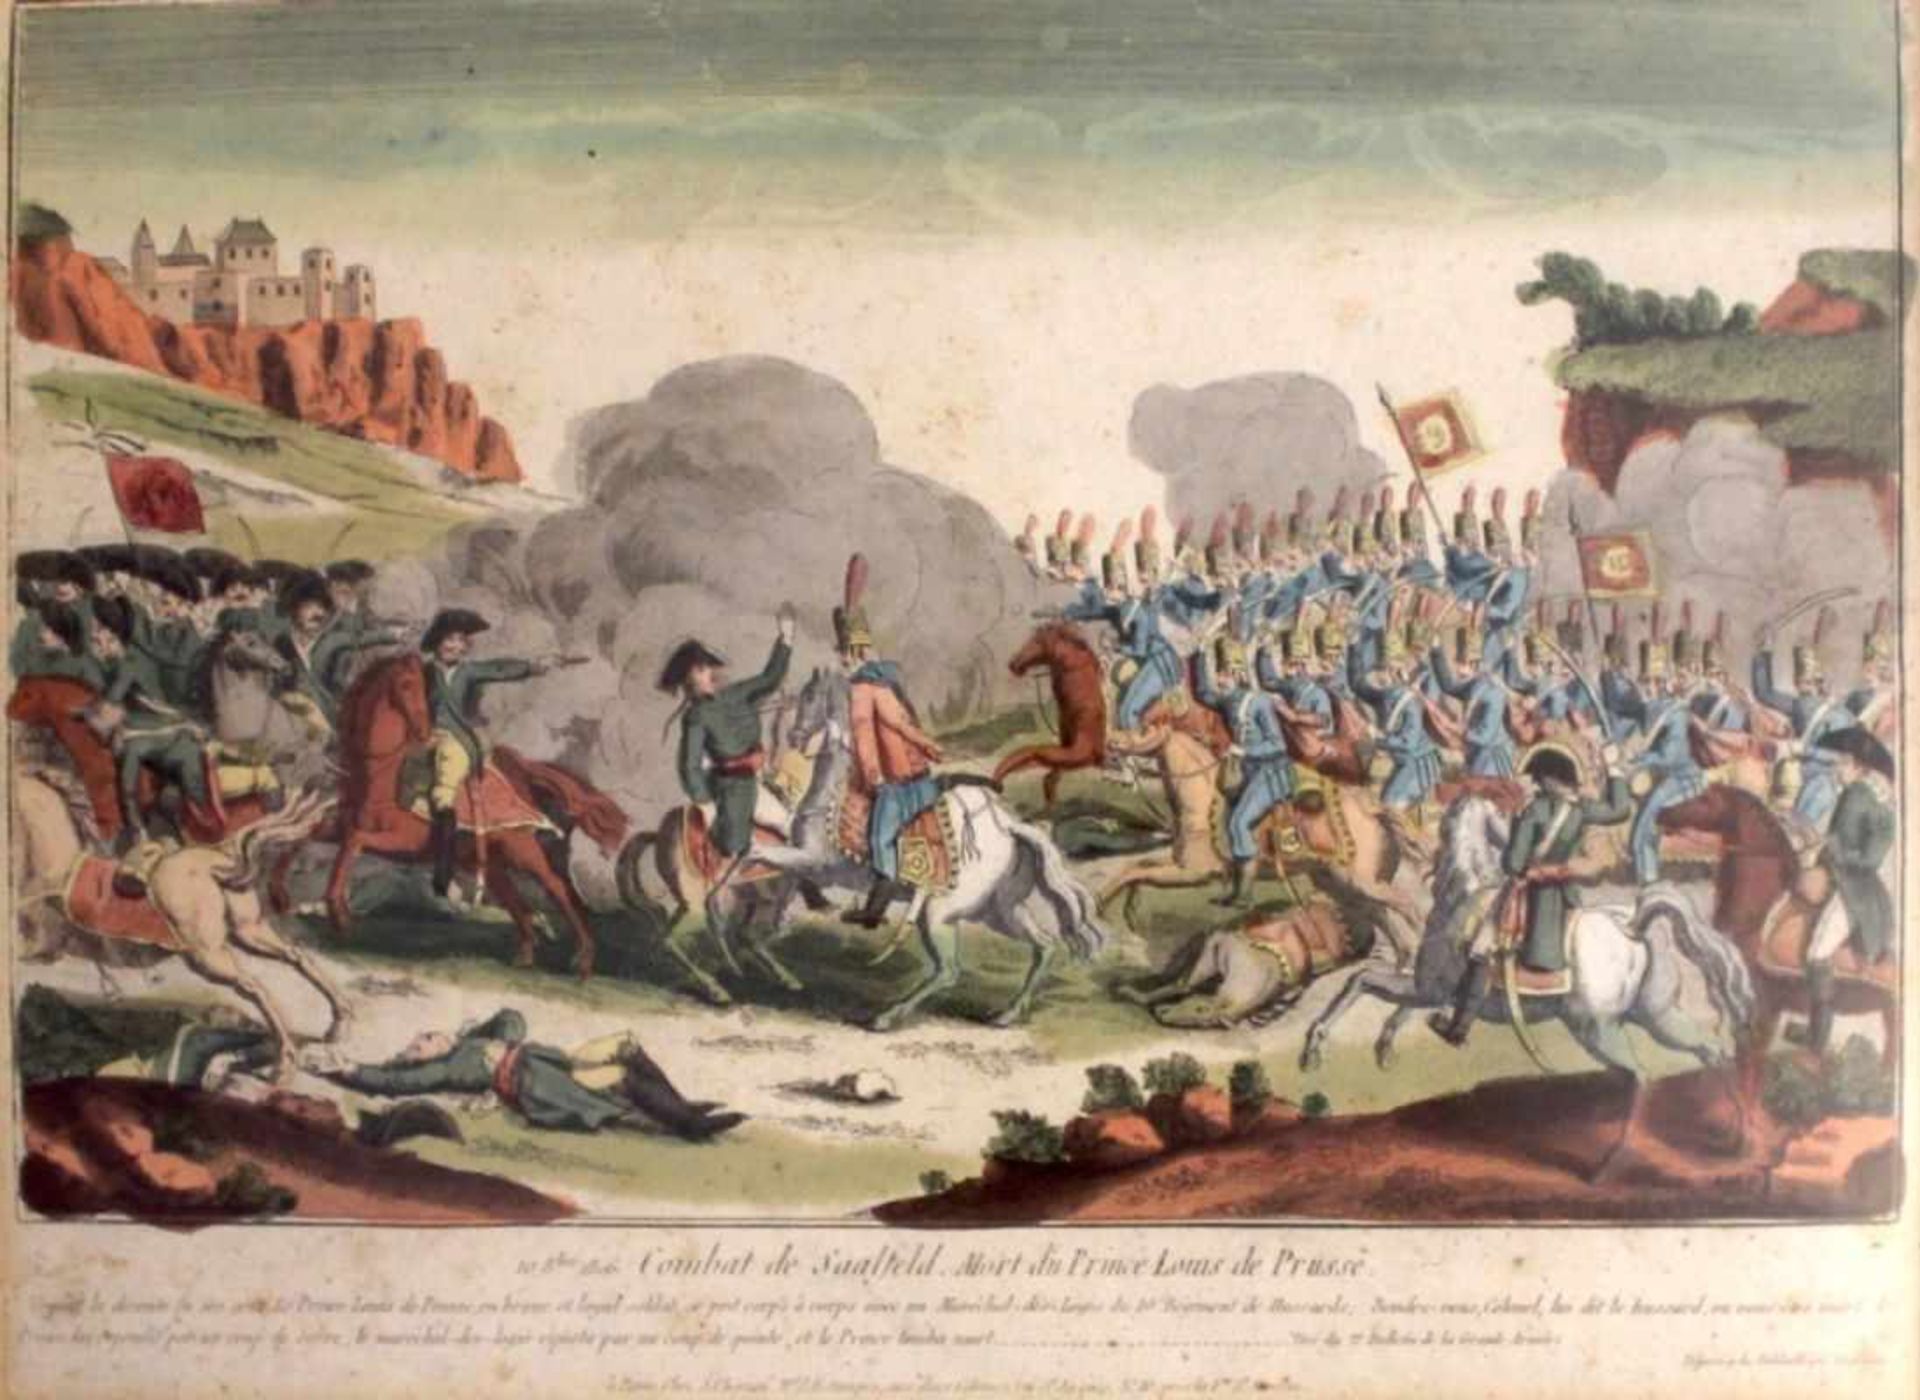 Kupferstich - bei J. Chereau Paris (19.Jahrhundert) "Combat de Saalfeld. Mort du Prince Louis de